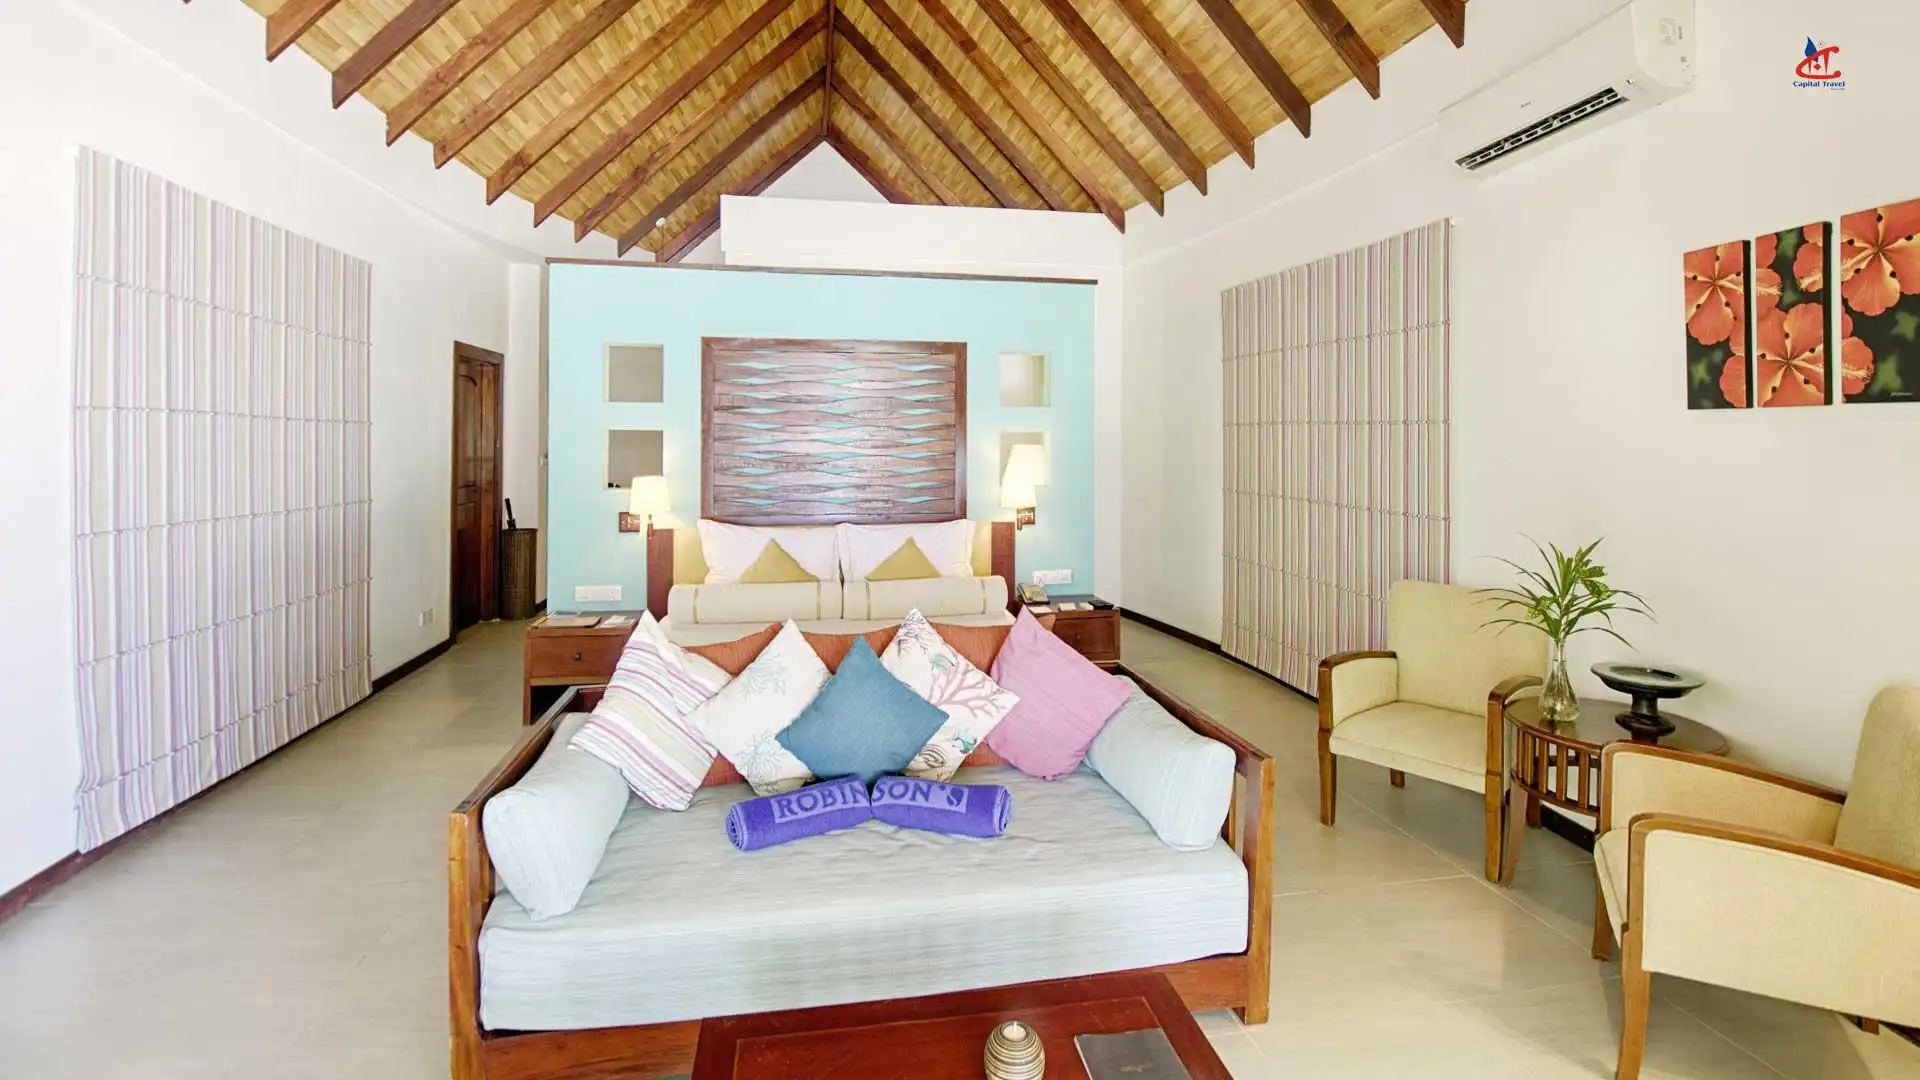 Robinson Club Maldives beach villa